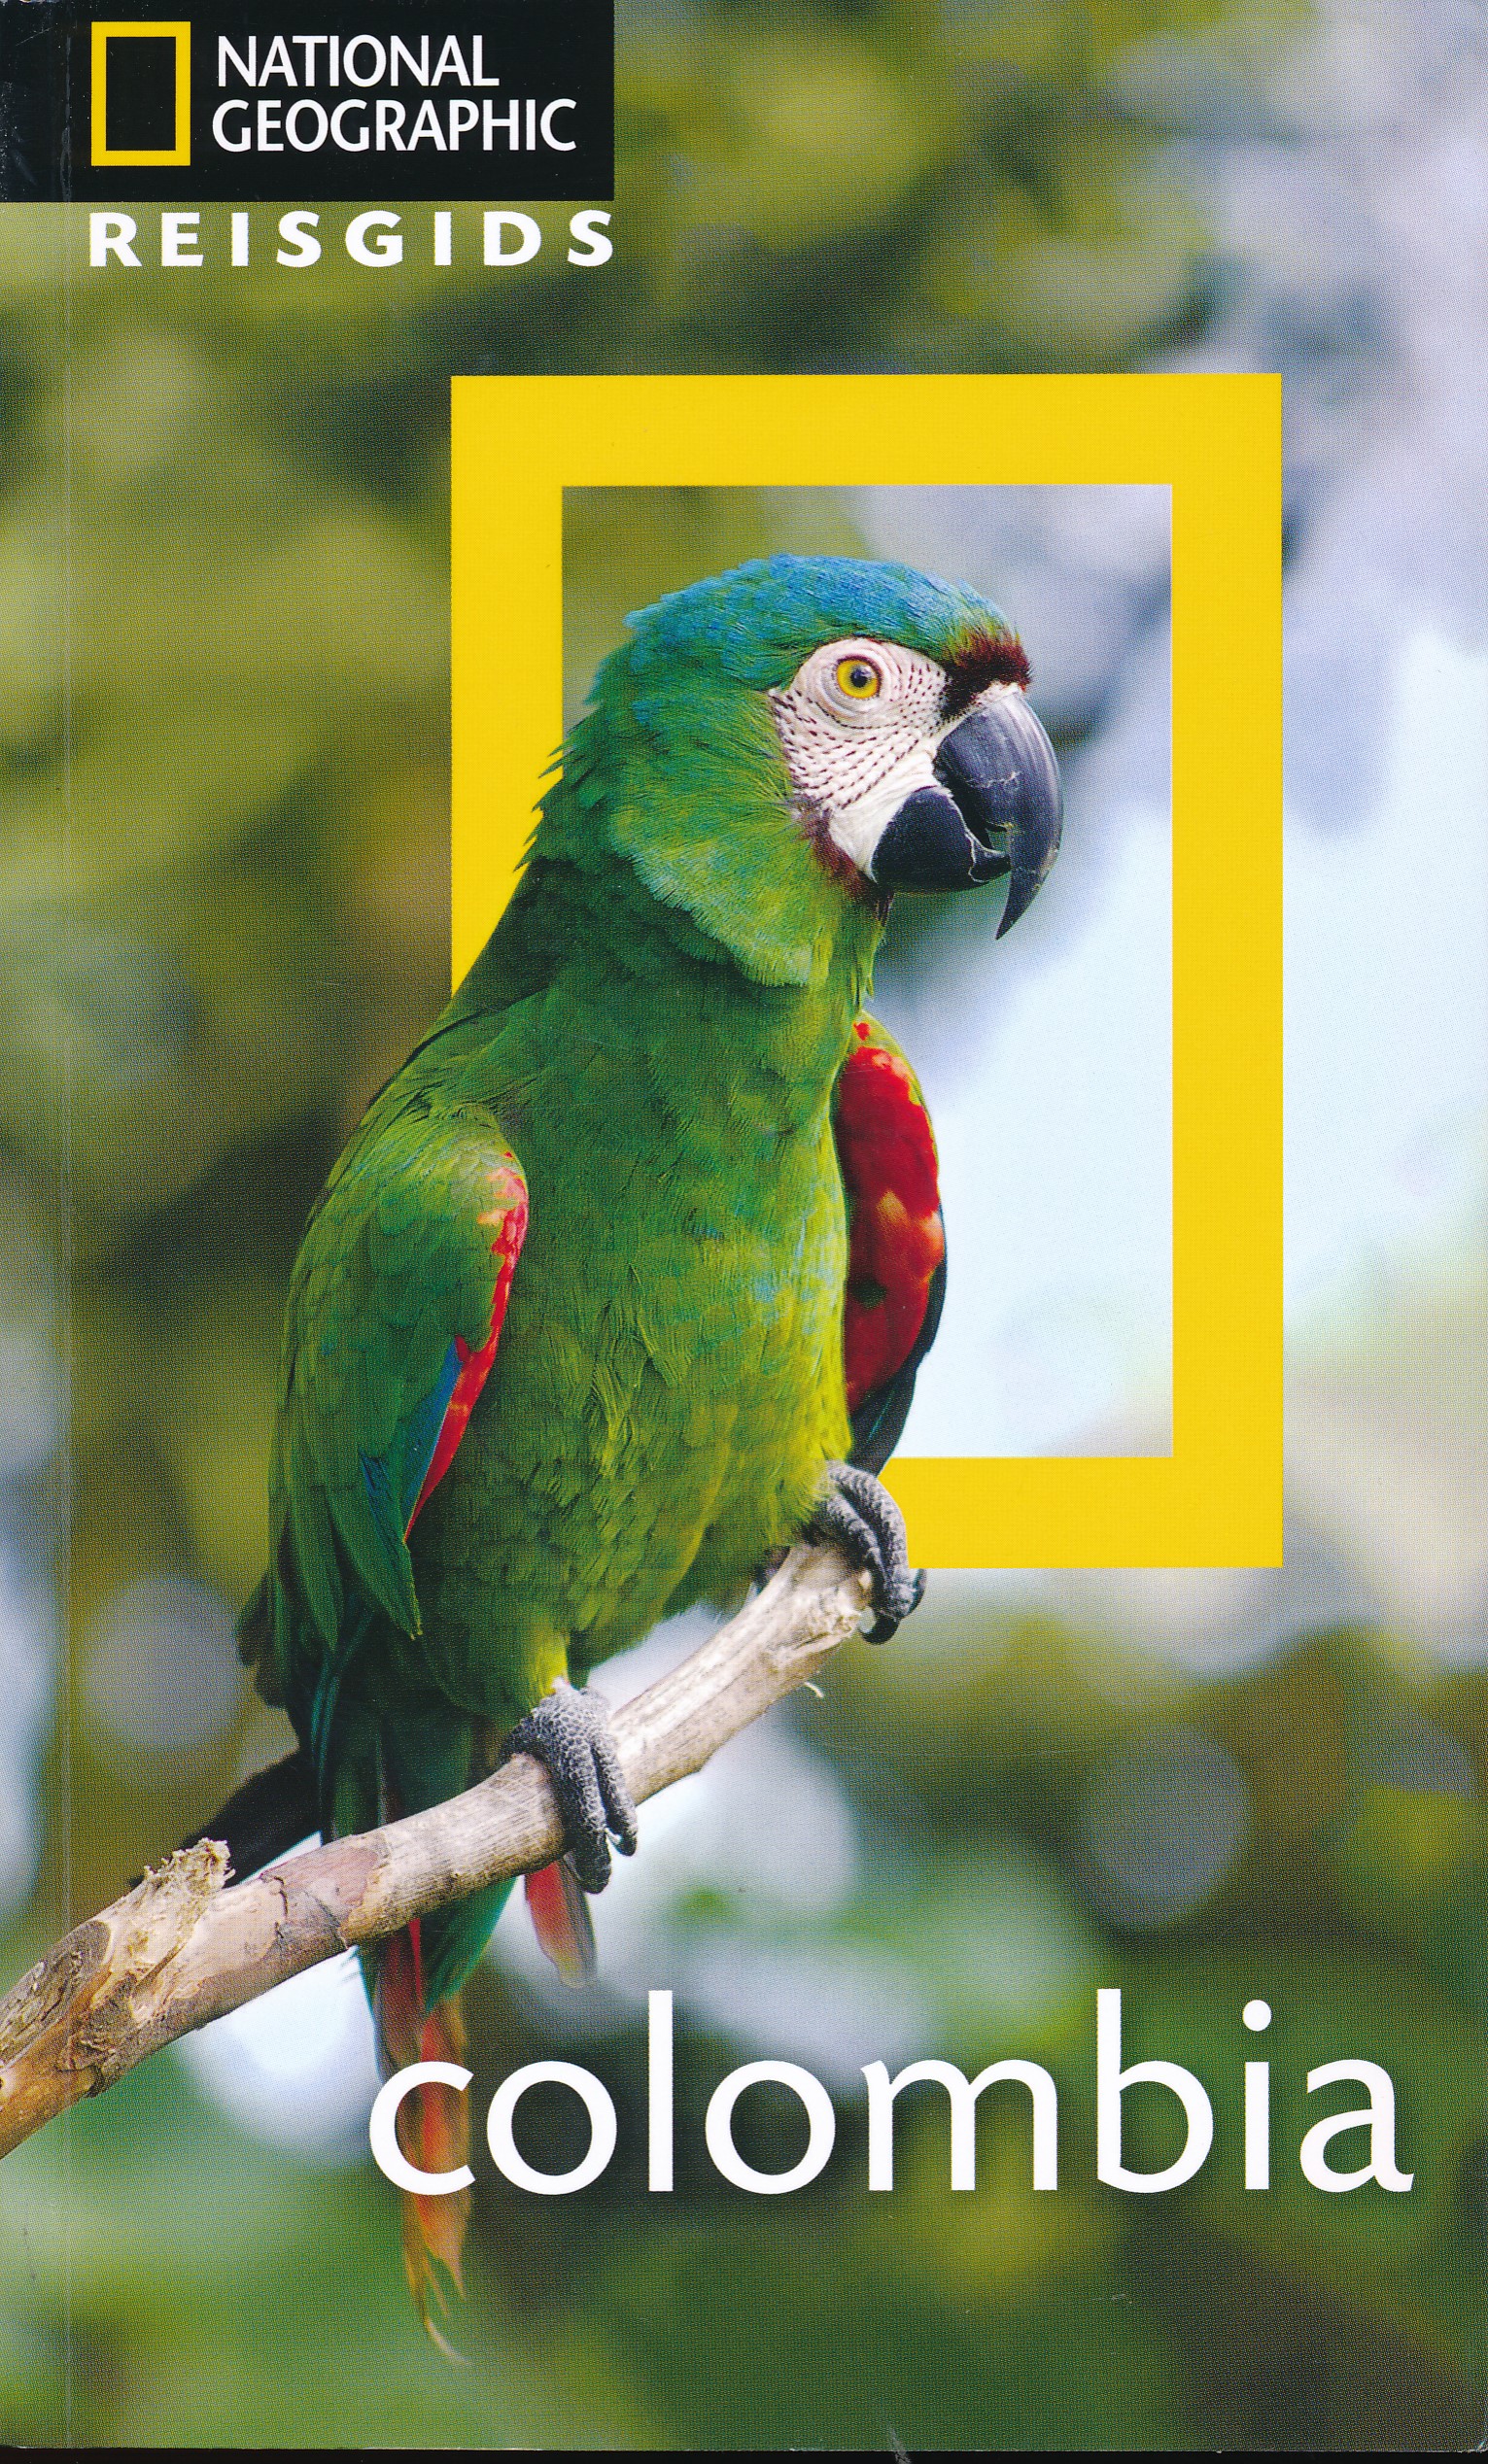 Online bestellen: Reisgids National Geographic Colombia | Kosmos Uitgevers